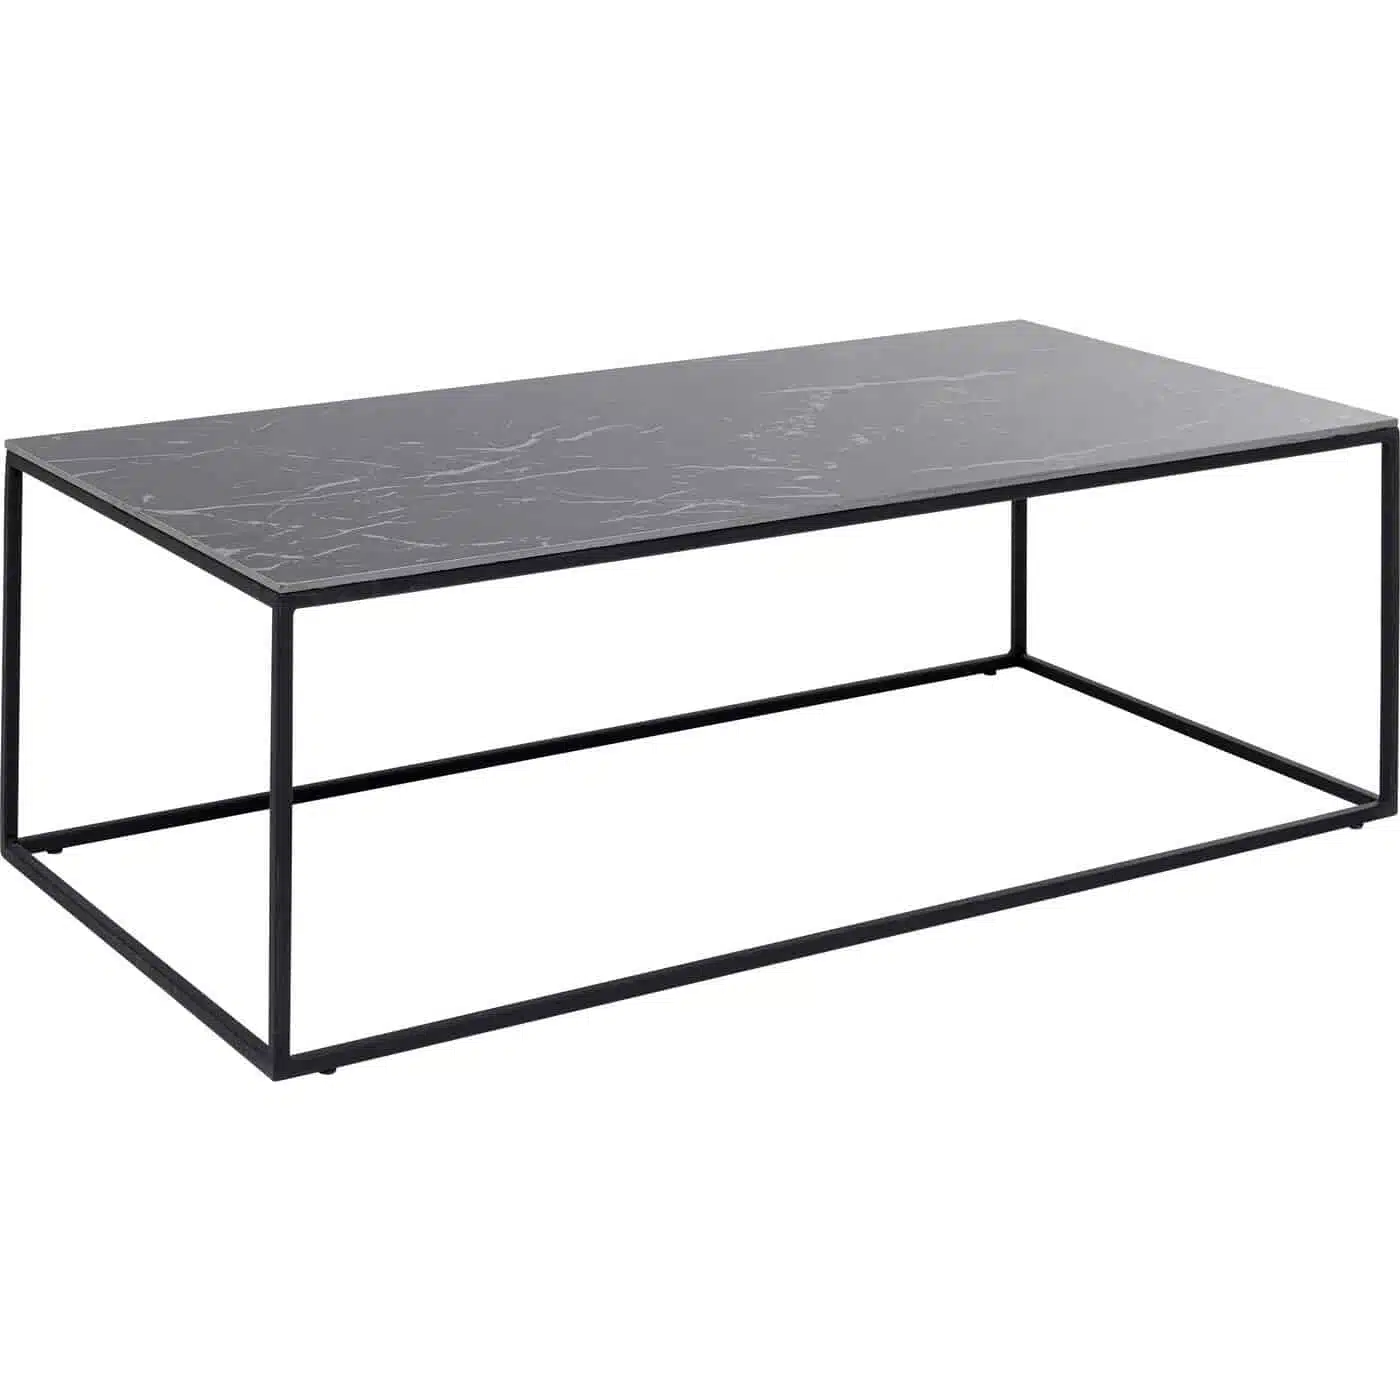 Table basse Greta 100x50cm noire Kare Design